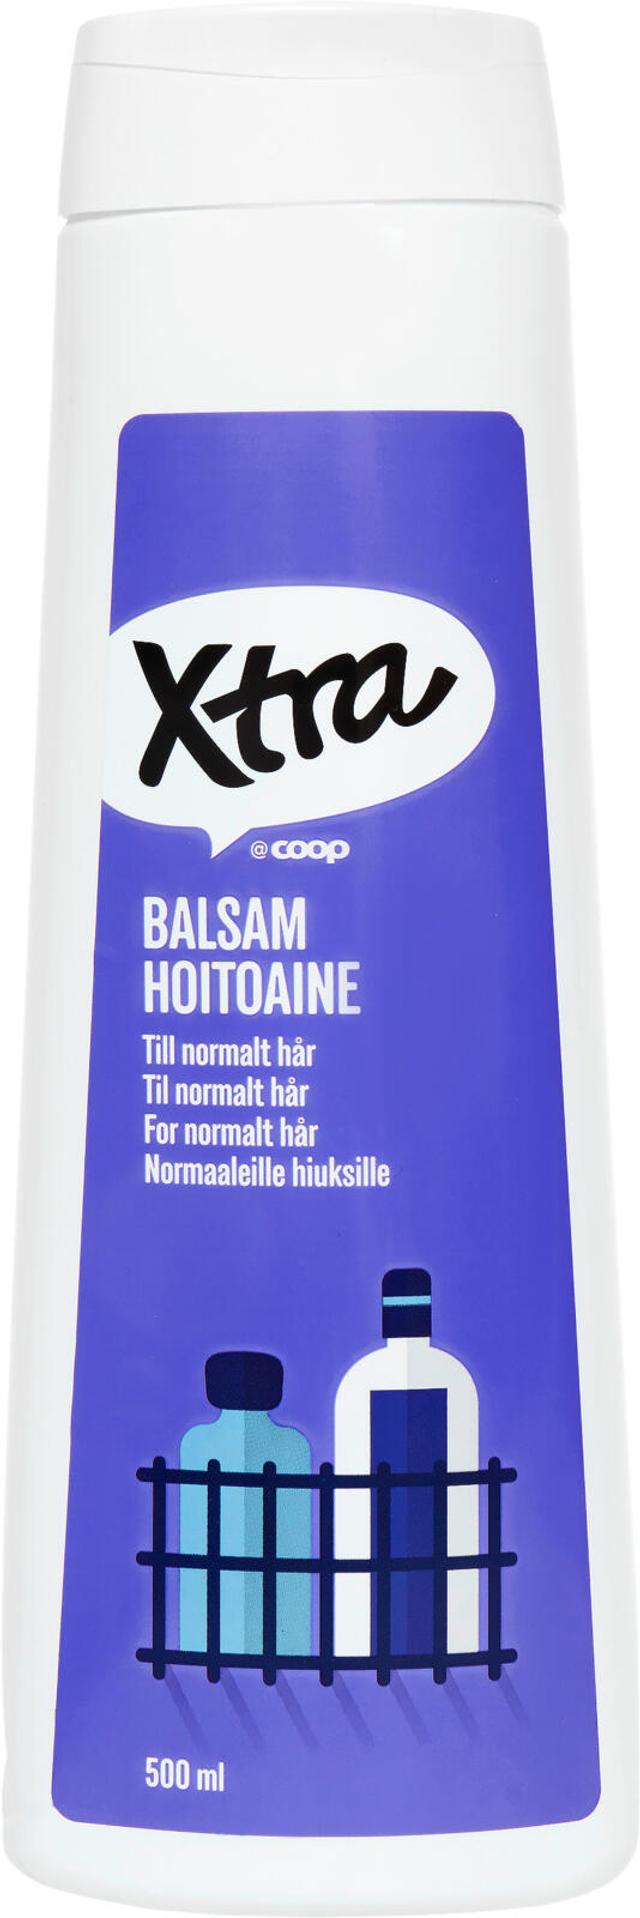 X-tra hoitoaine 500ml